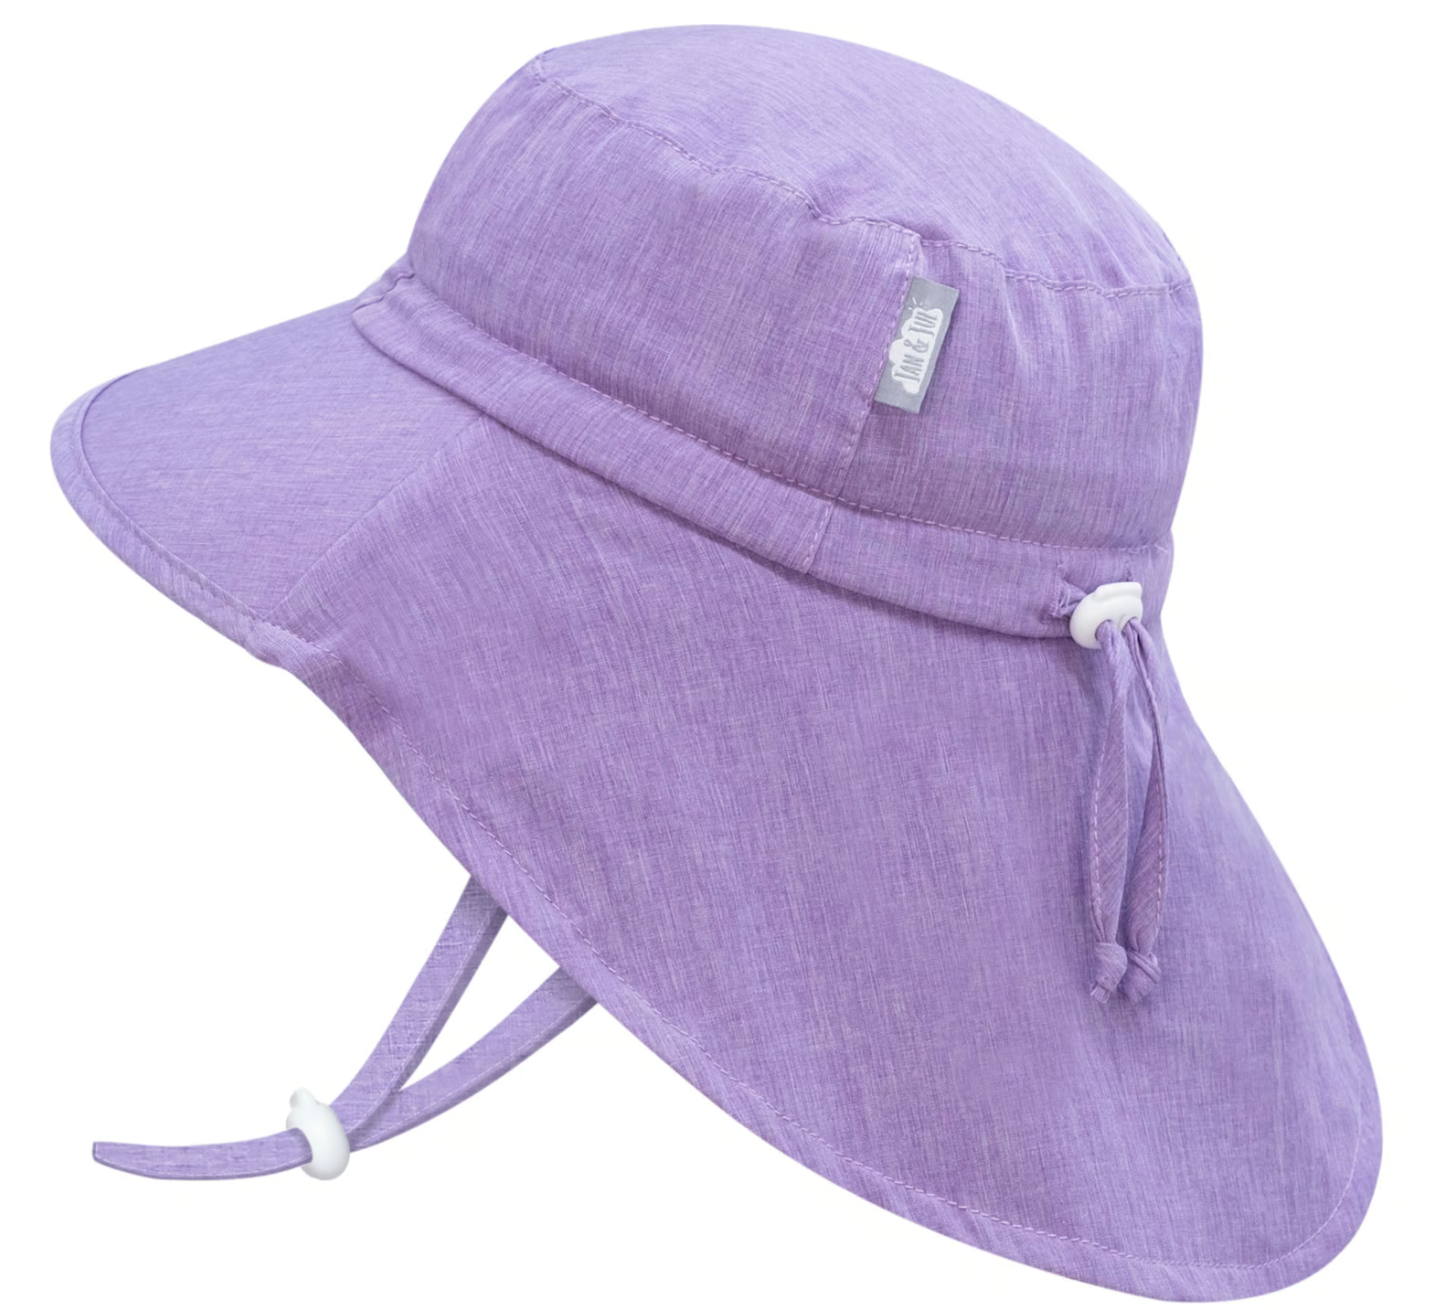 Jan & Jul - Aqua Dry Adventure Hats